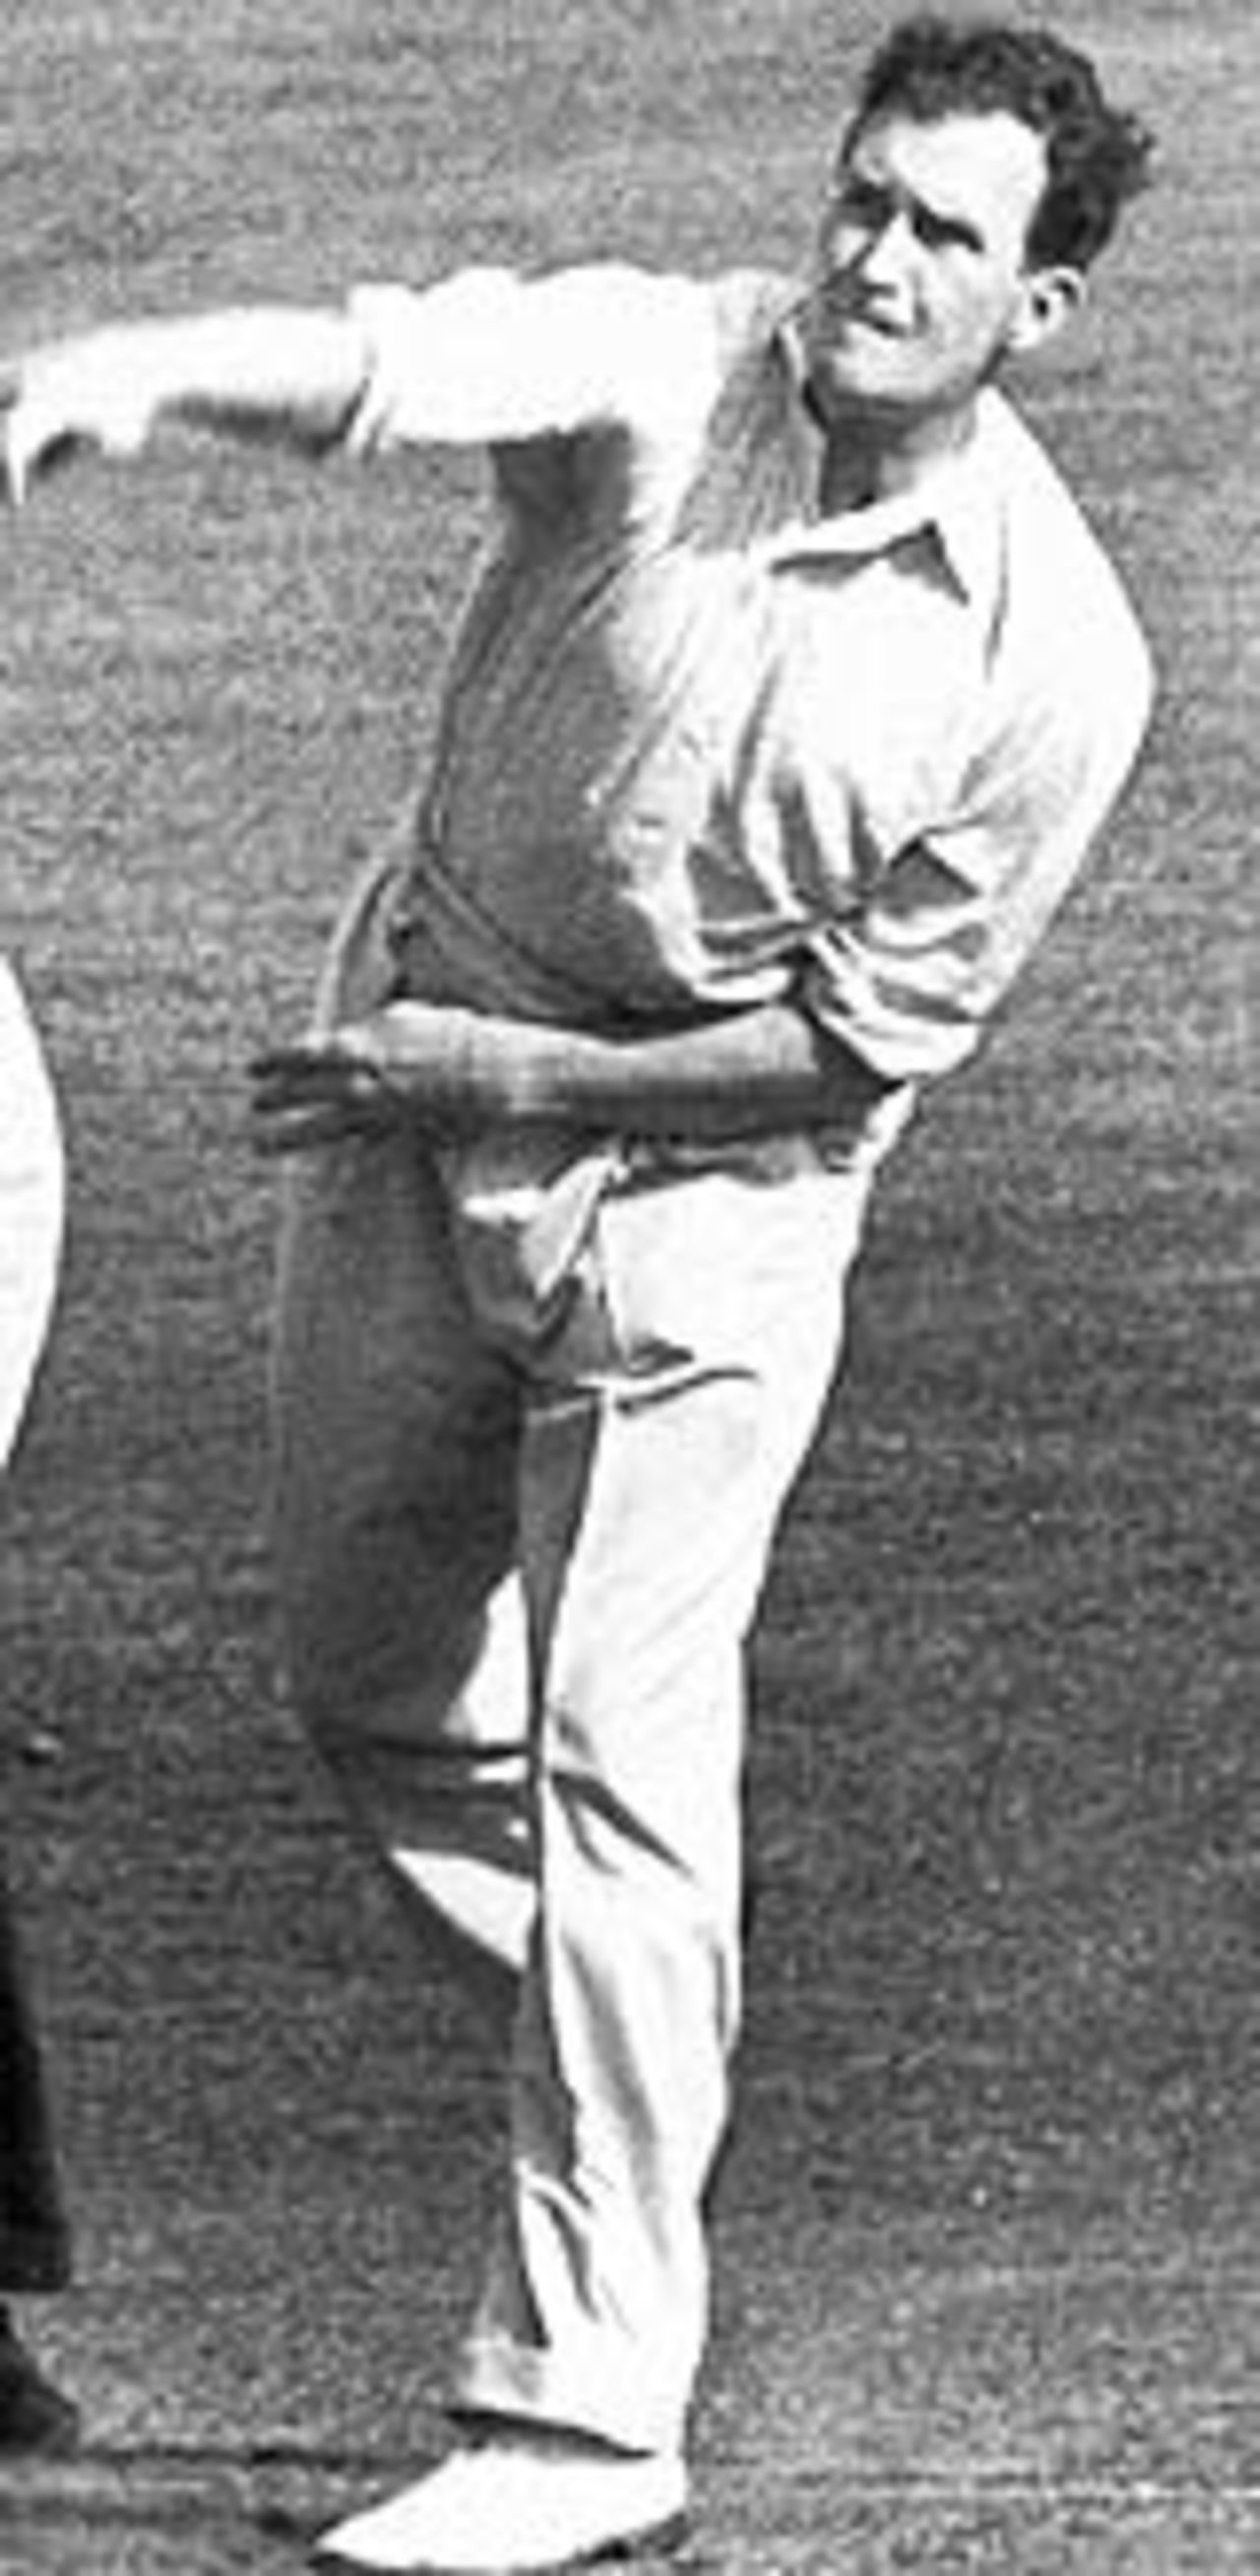 Jim Laker in action, Surrey v Australia, May 1, 1956